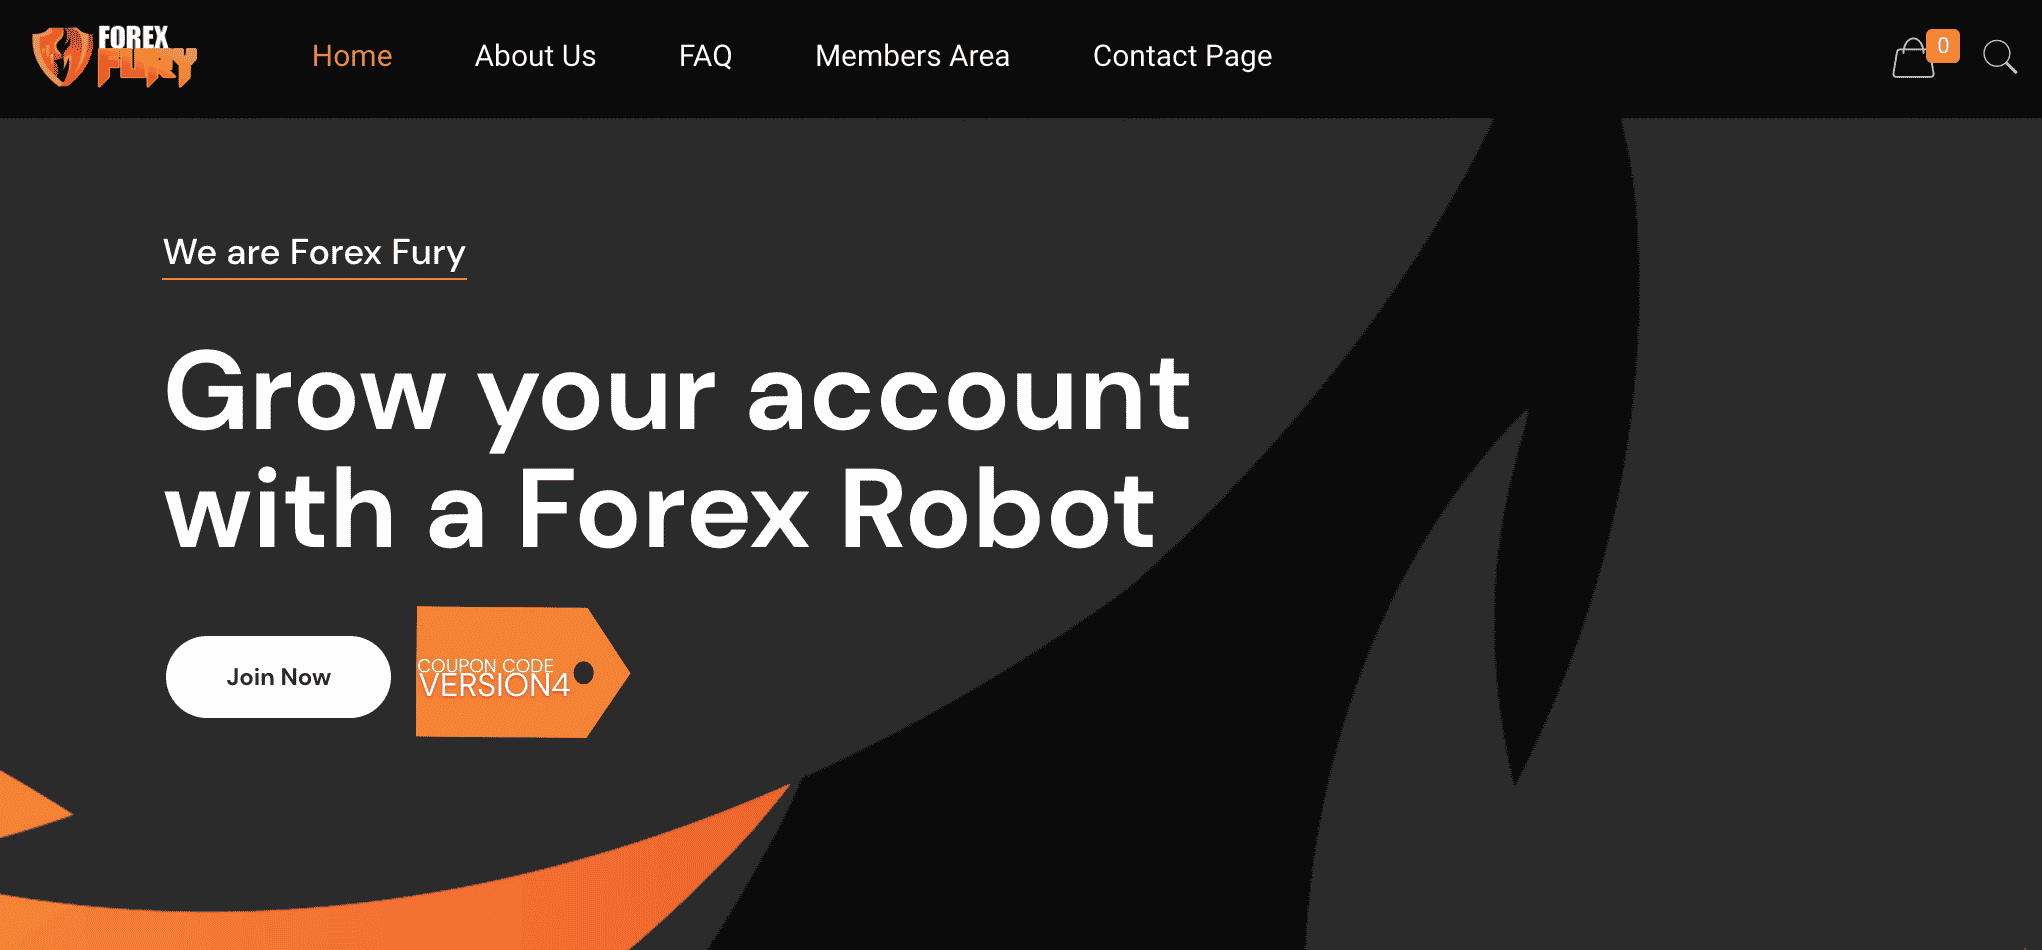 forex furty robot